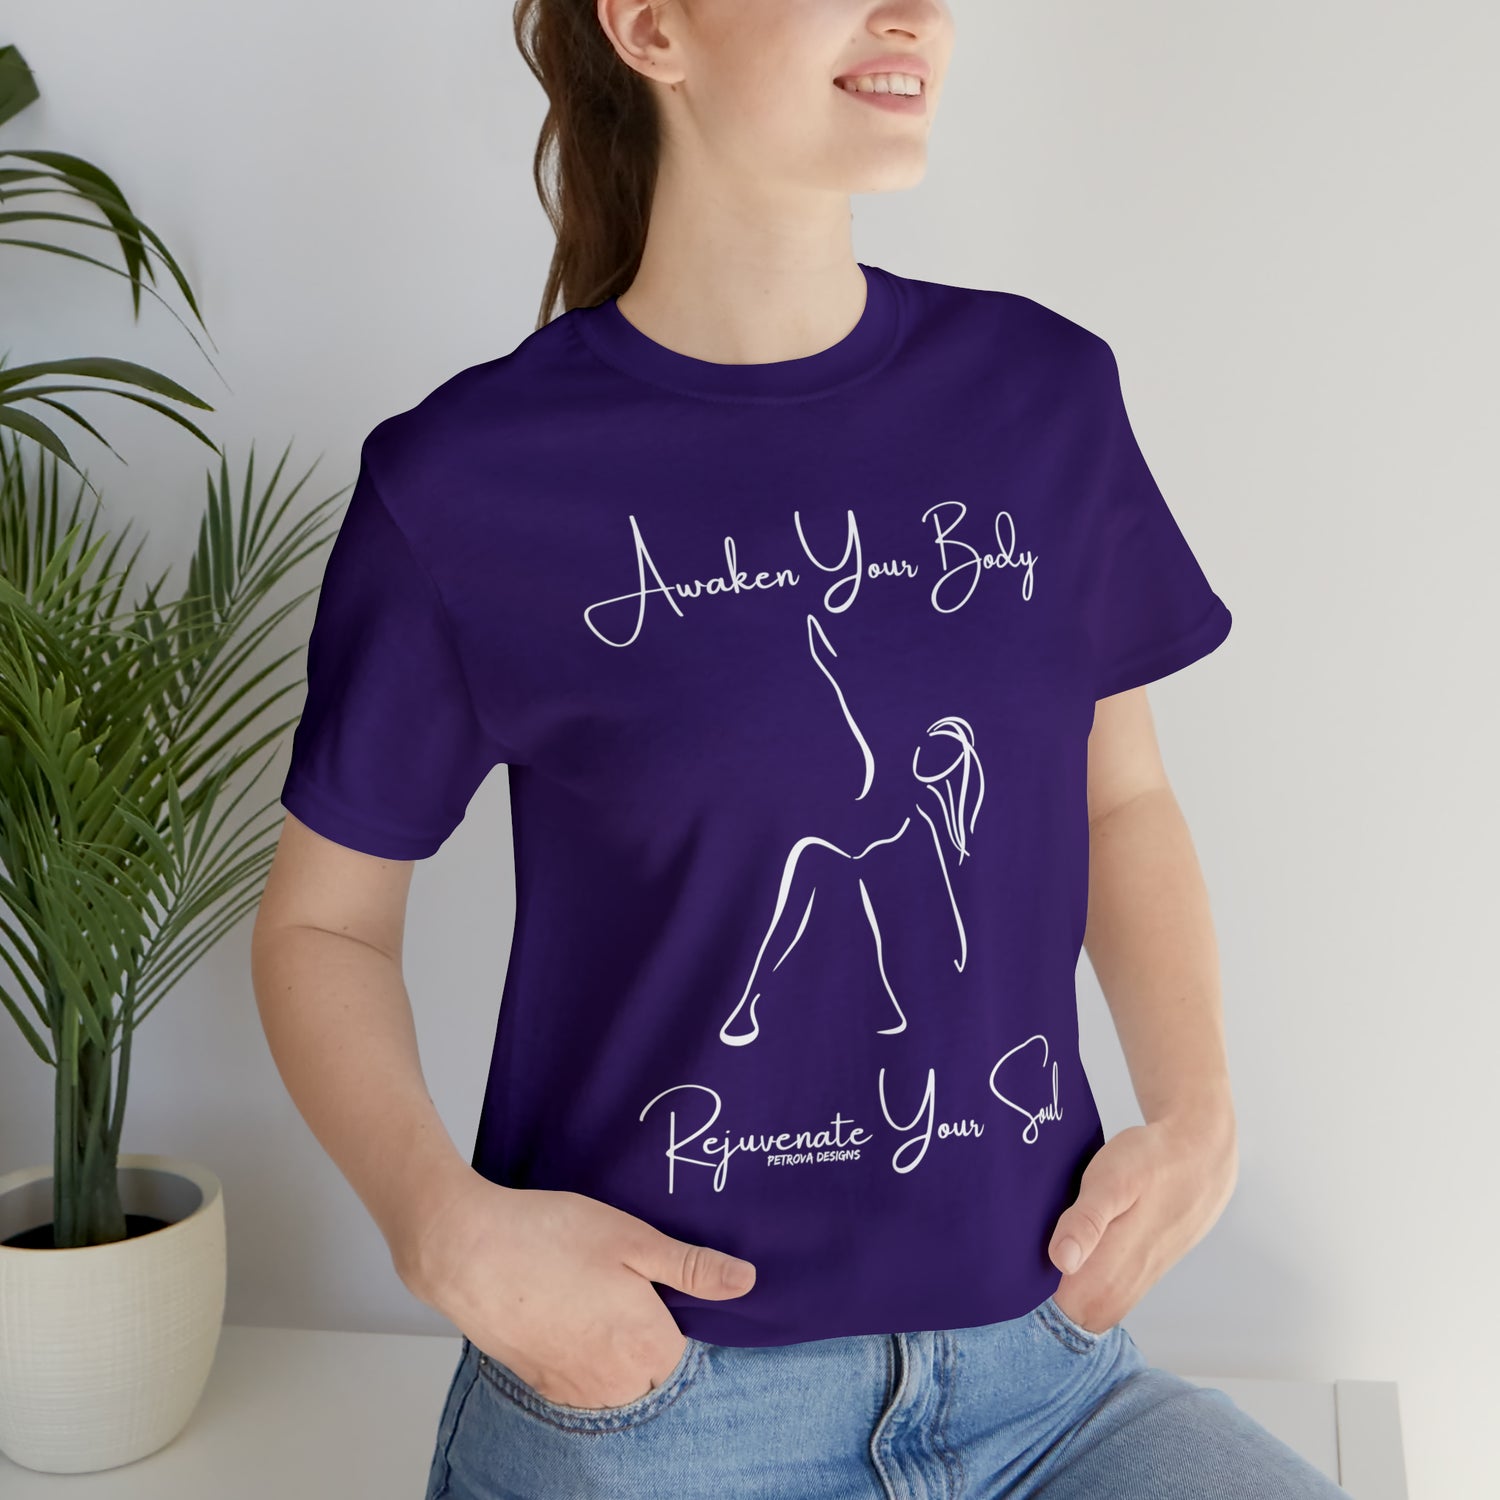 Team Purple T-Shirt Tshirt Design Gift for Friend and Family Short Sleeved Shirt Yoga Petrova Designs